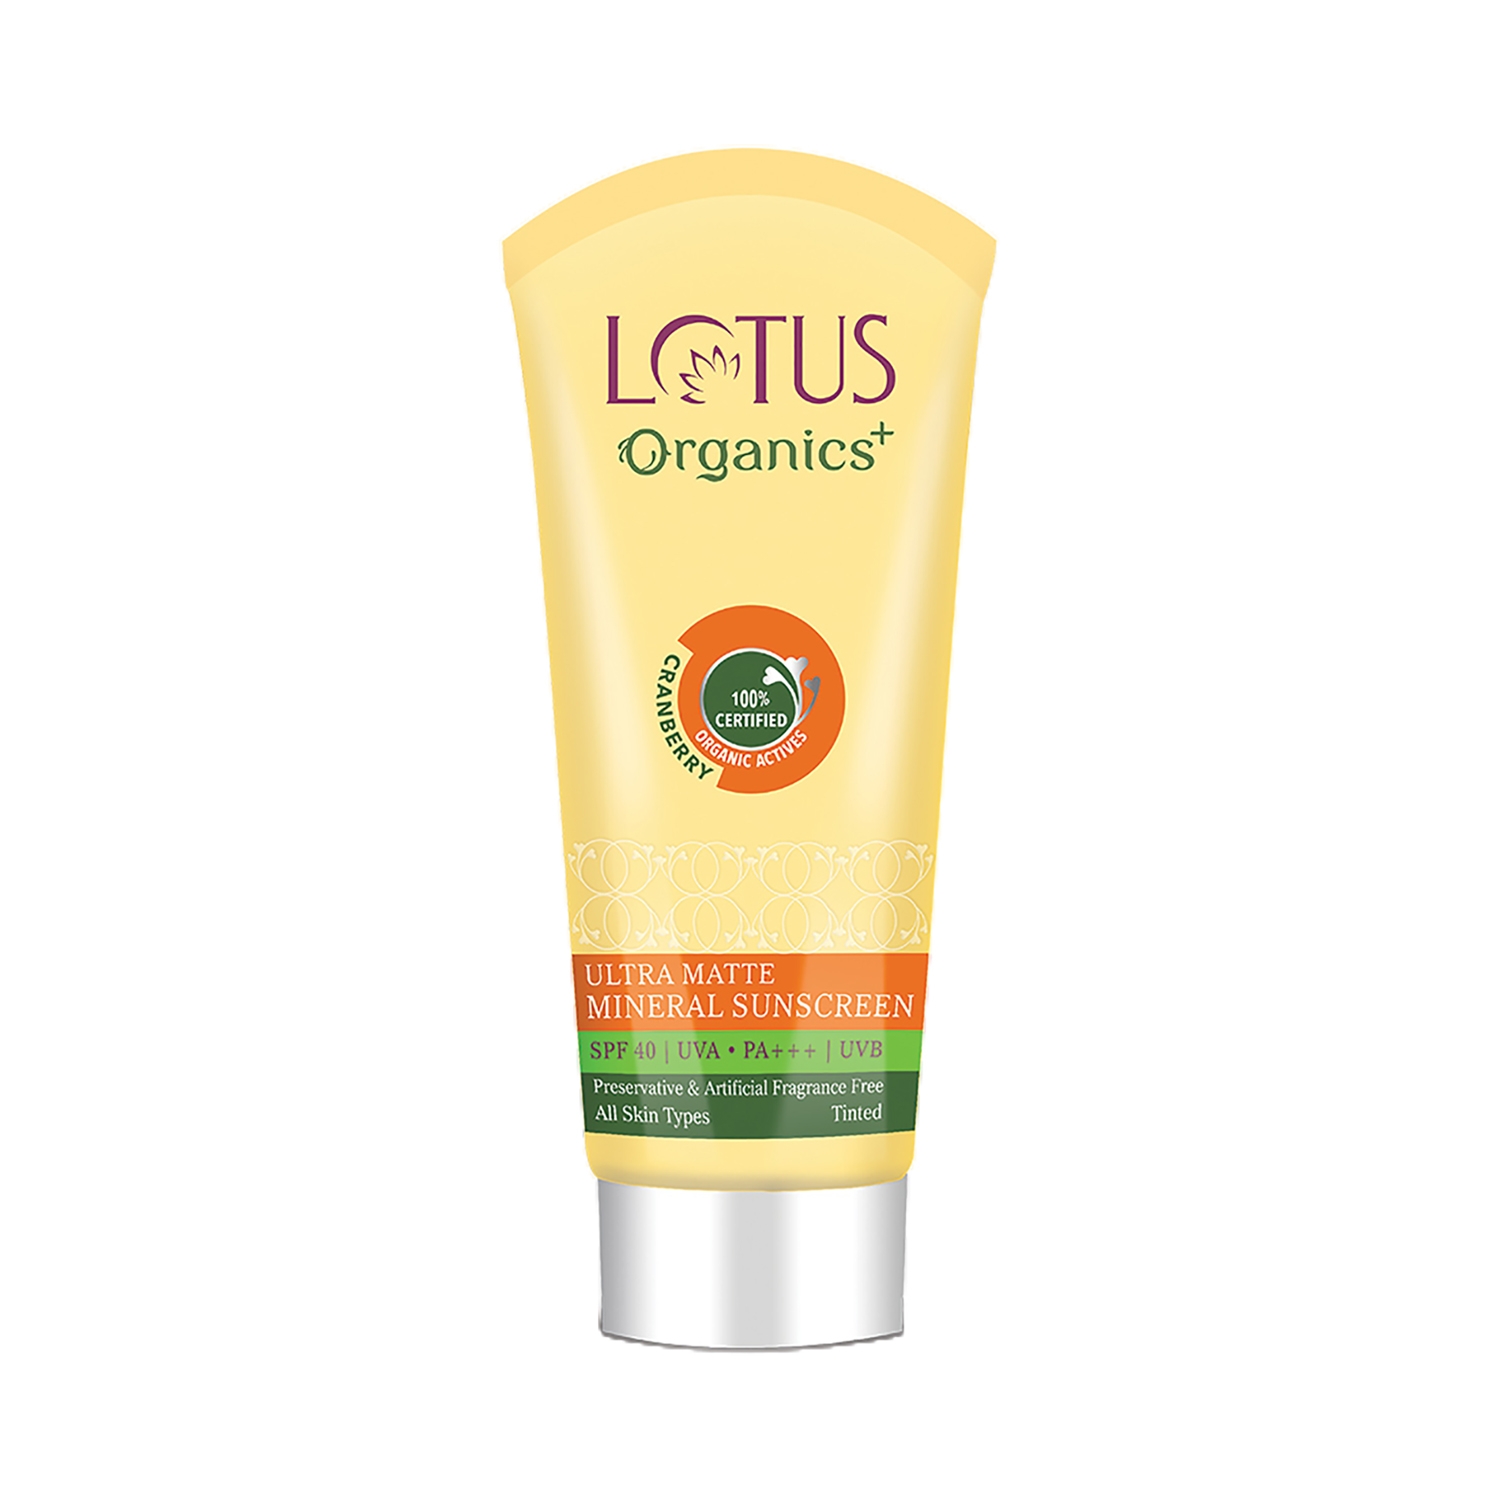 Lotus Organics | Lotus Organics Ultra Matte Mineral Sunscreen SPF 40 Pa+++ (100g)